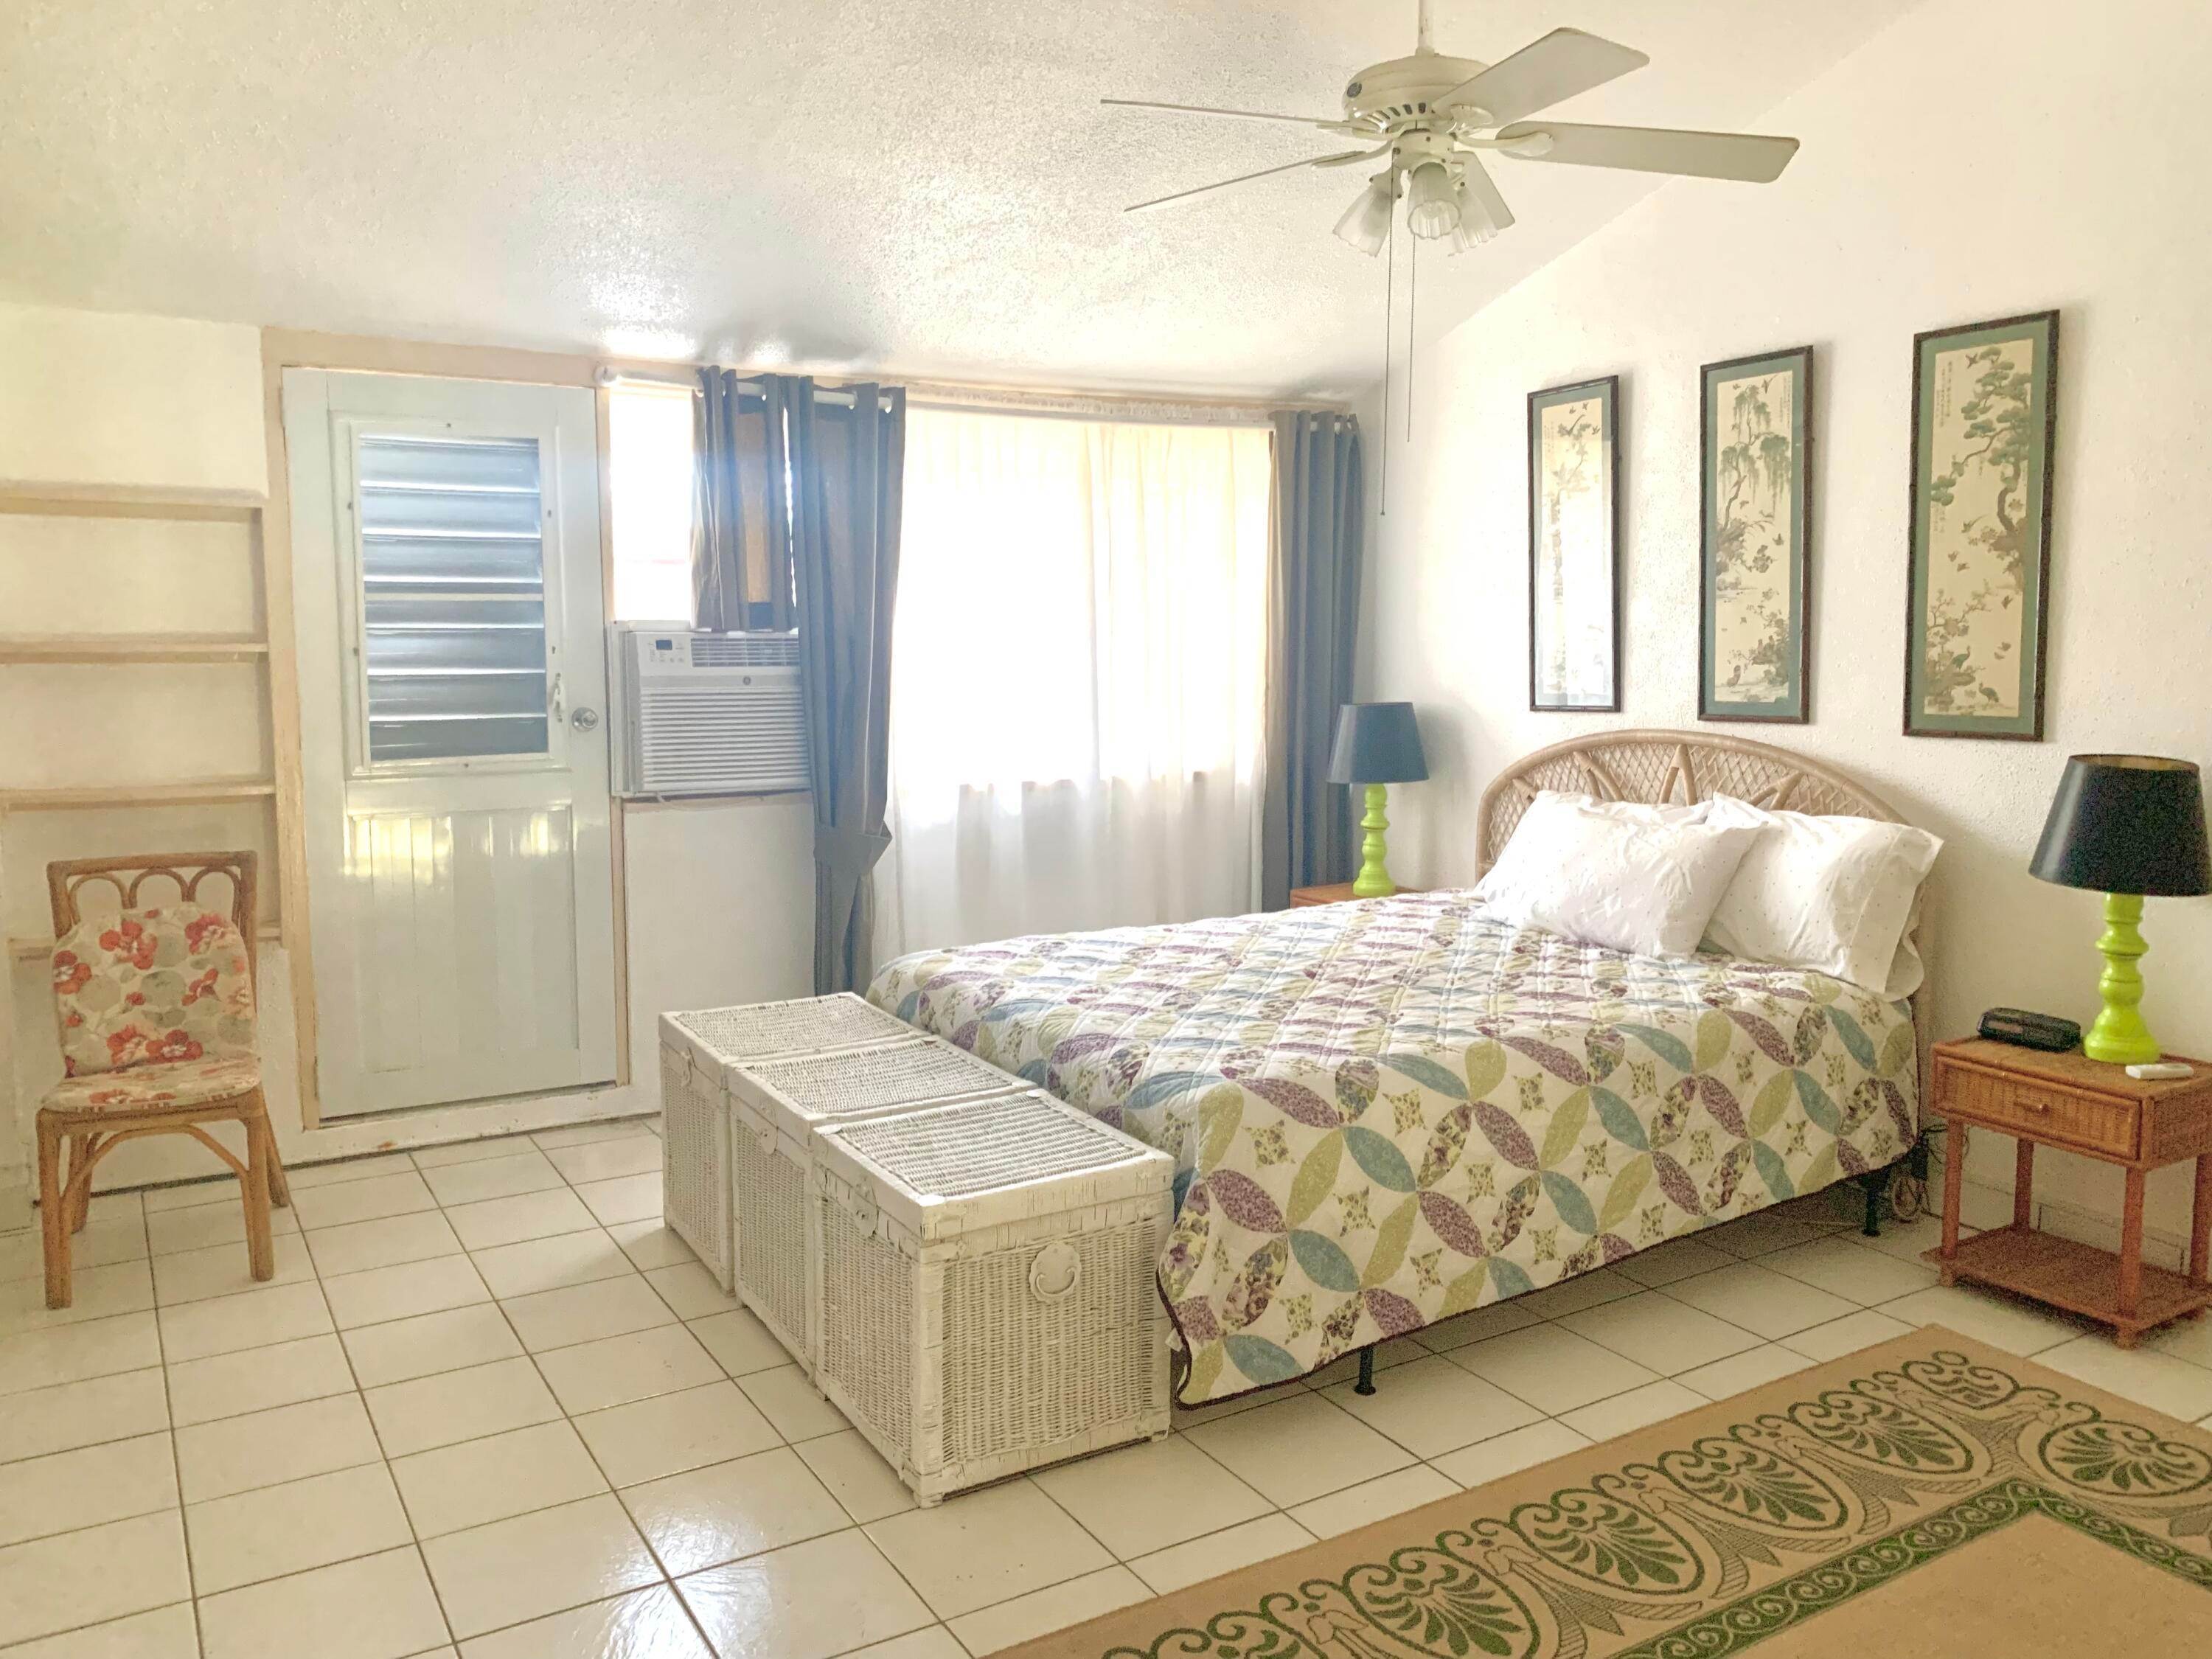 19. Condominiums at Mill Harbour 329 Golden Rock CO St Croix, Virgin Islands 00820 United States Virgin Islands